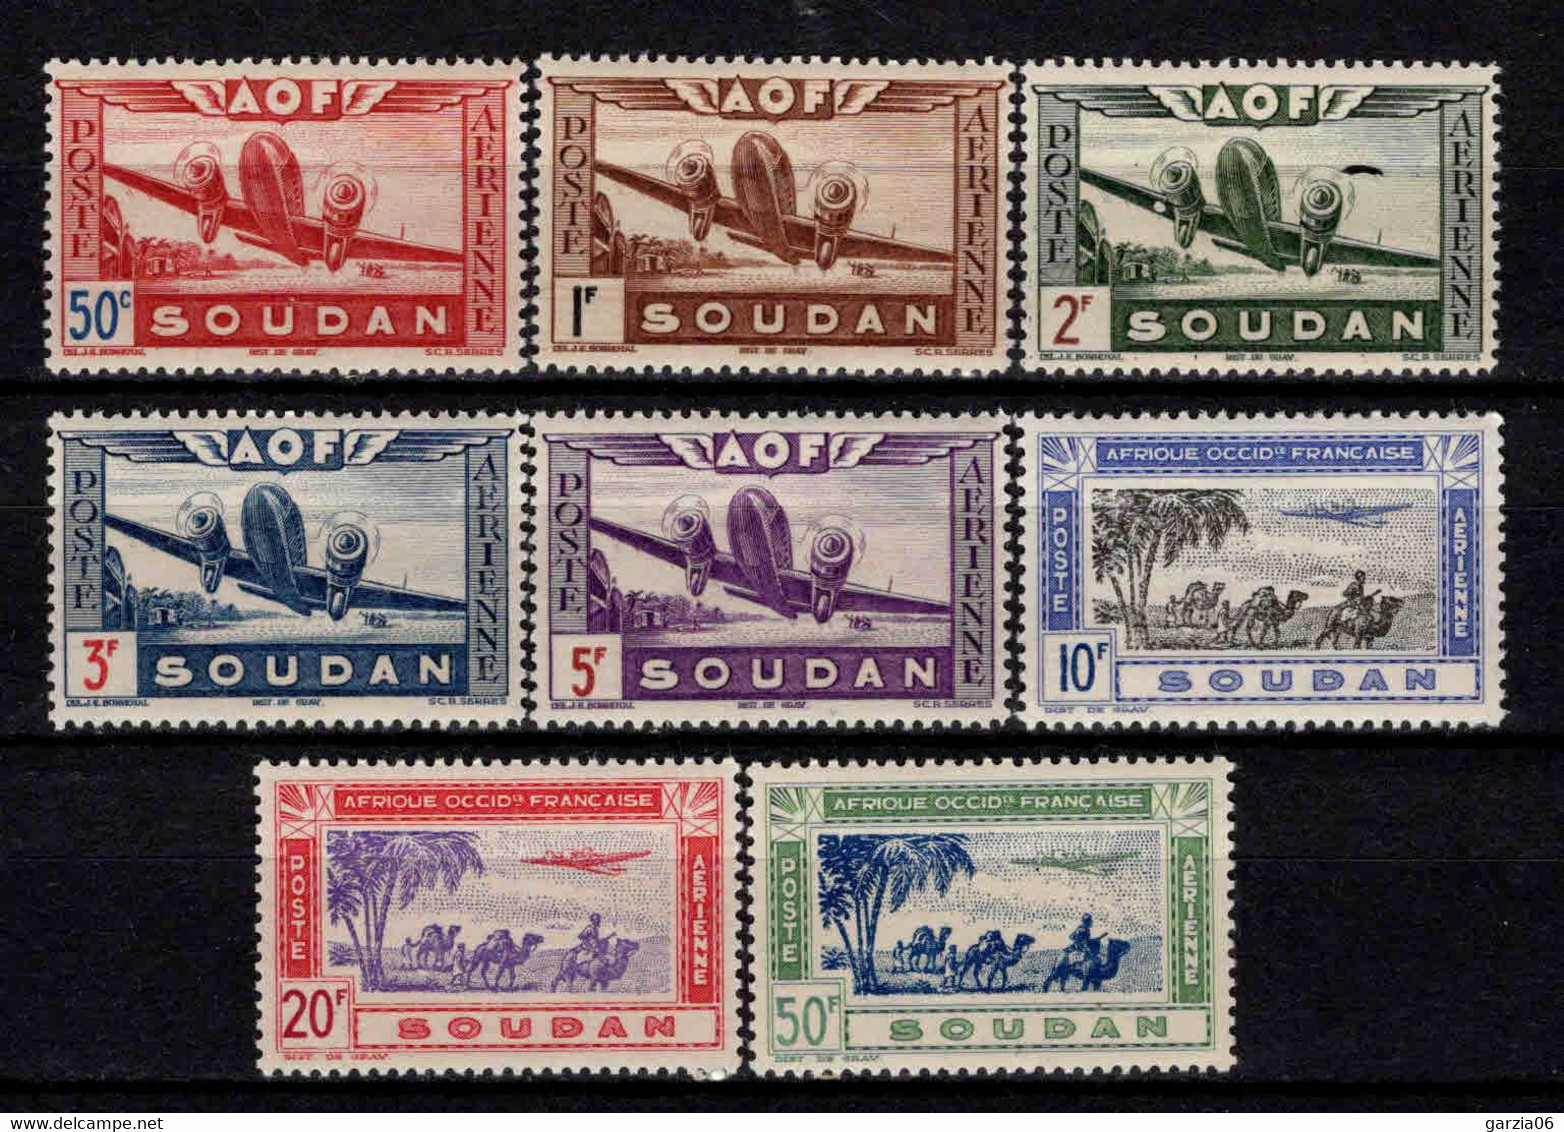 Soudan - 1942  - Avion En Vol - PA 10 à 17  - Neuf ** - MNH - Ongebruikt